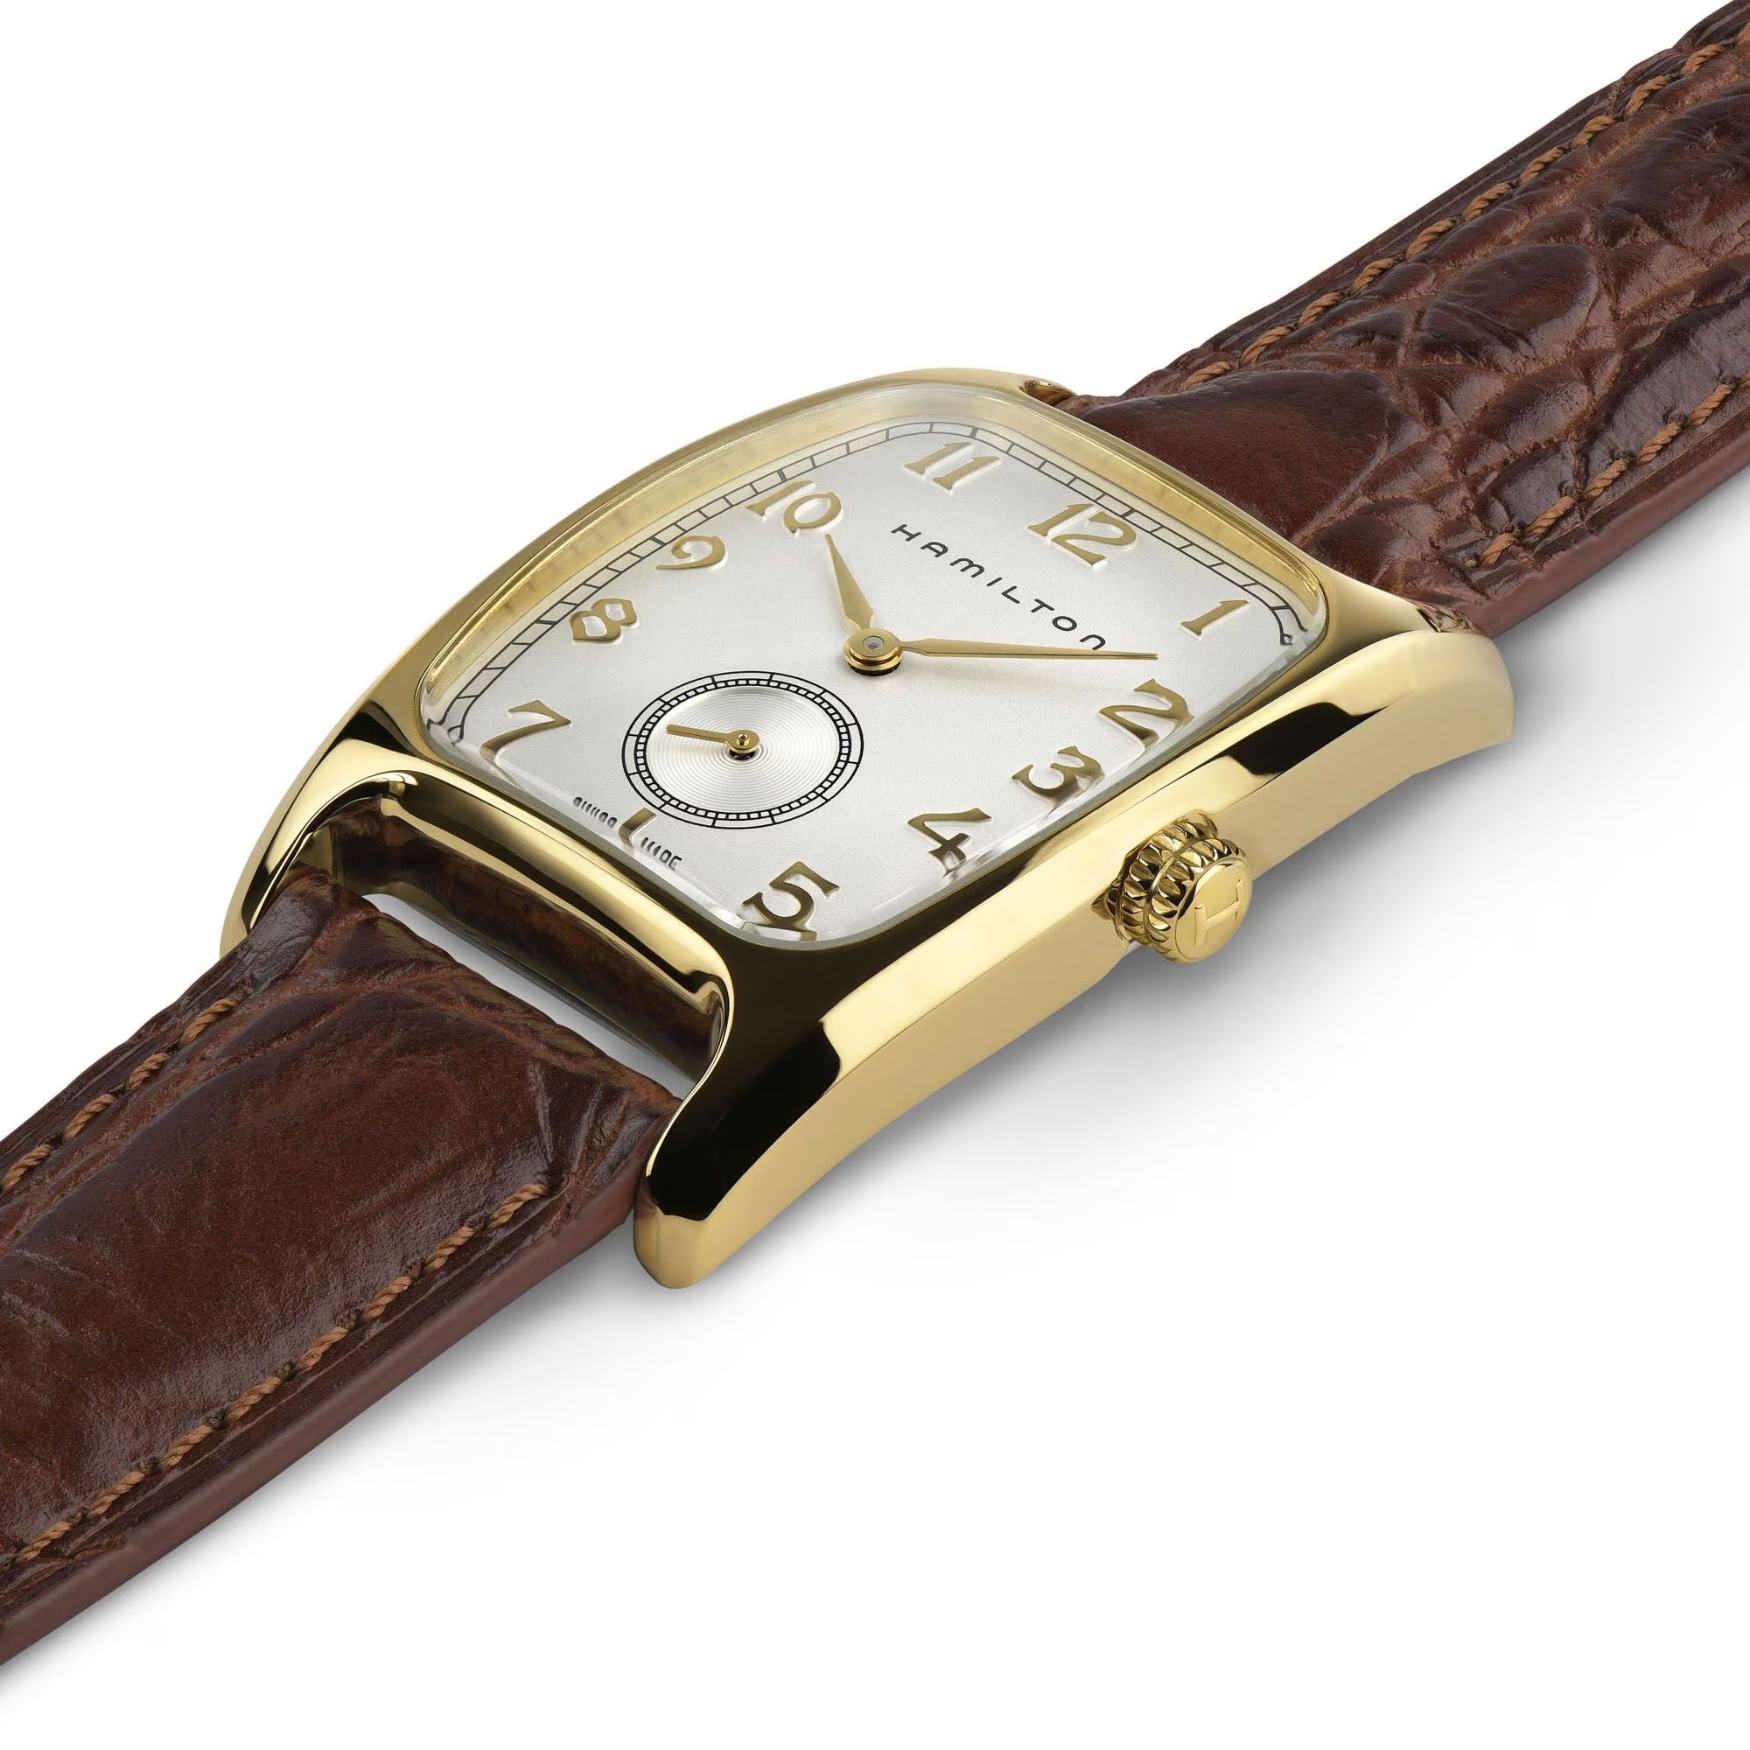 Relógio Hamilton American Classic Boulton Indiana Jones H13431553